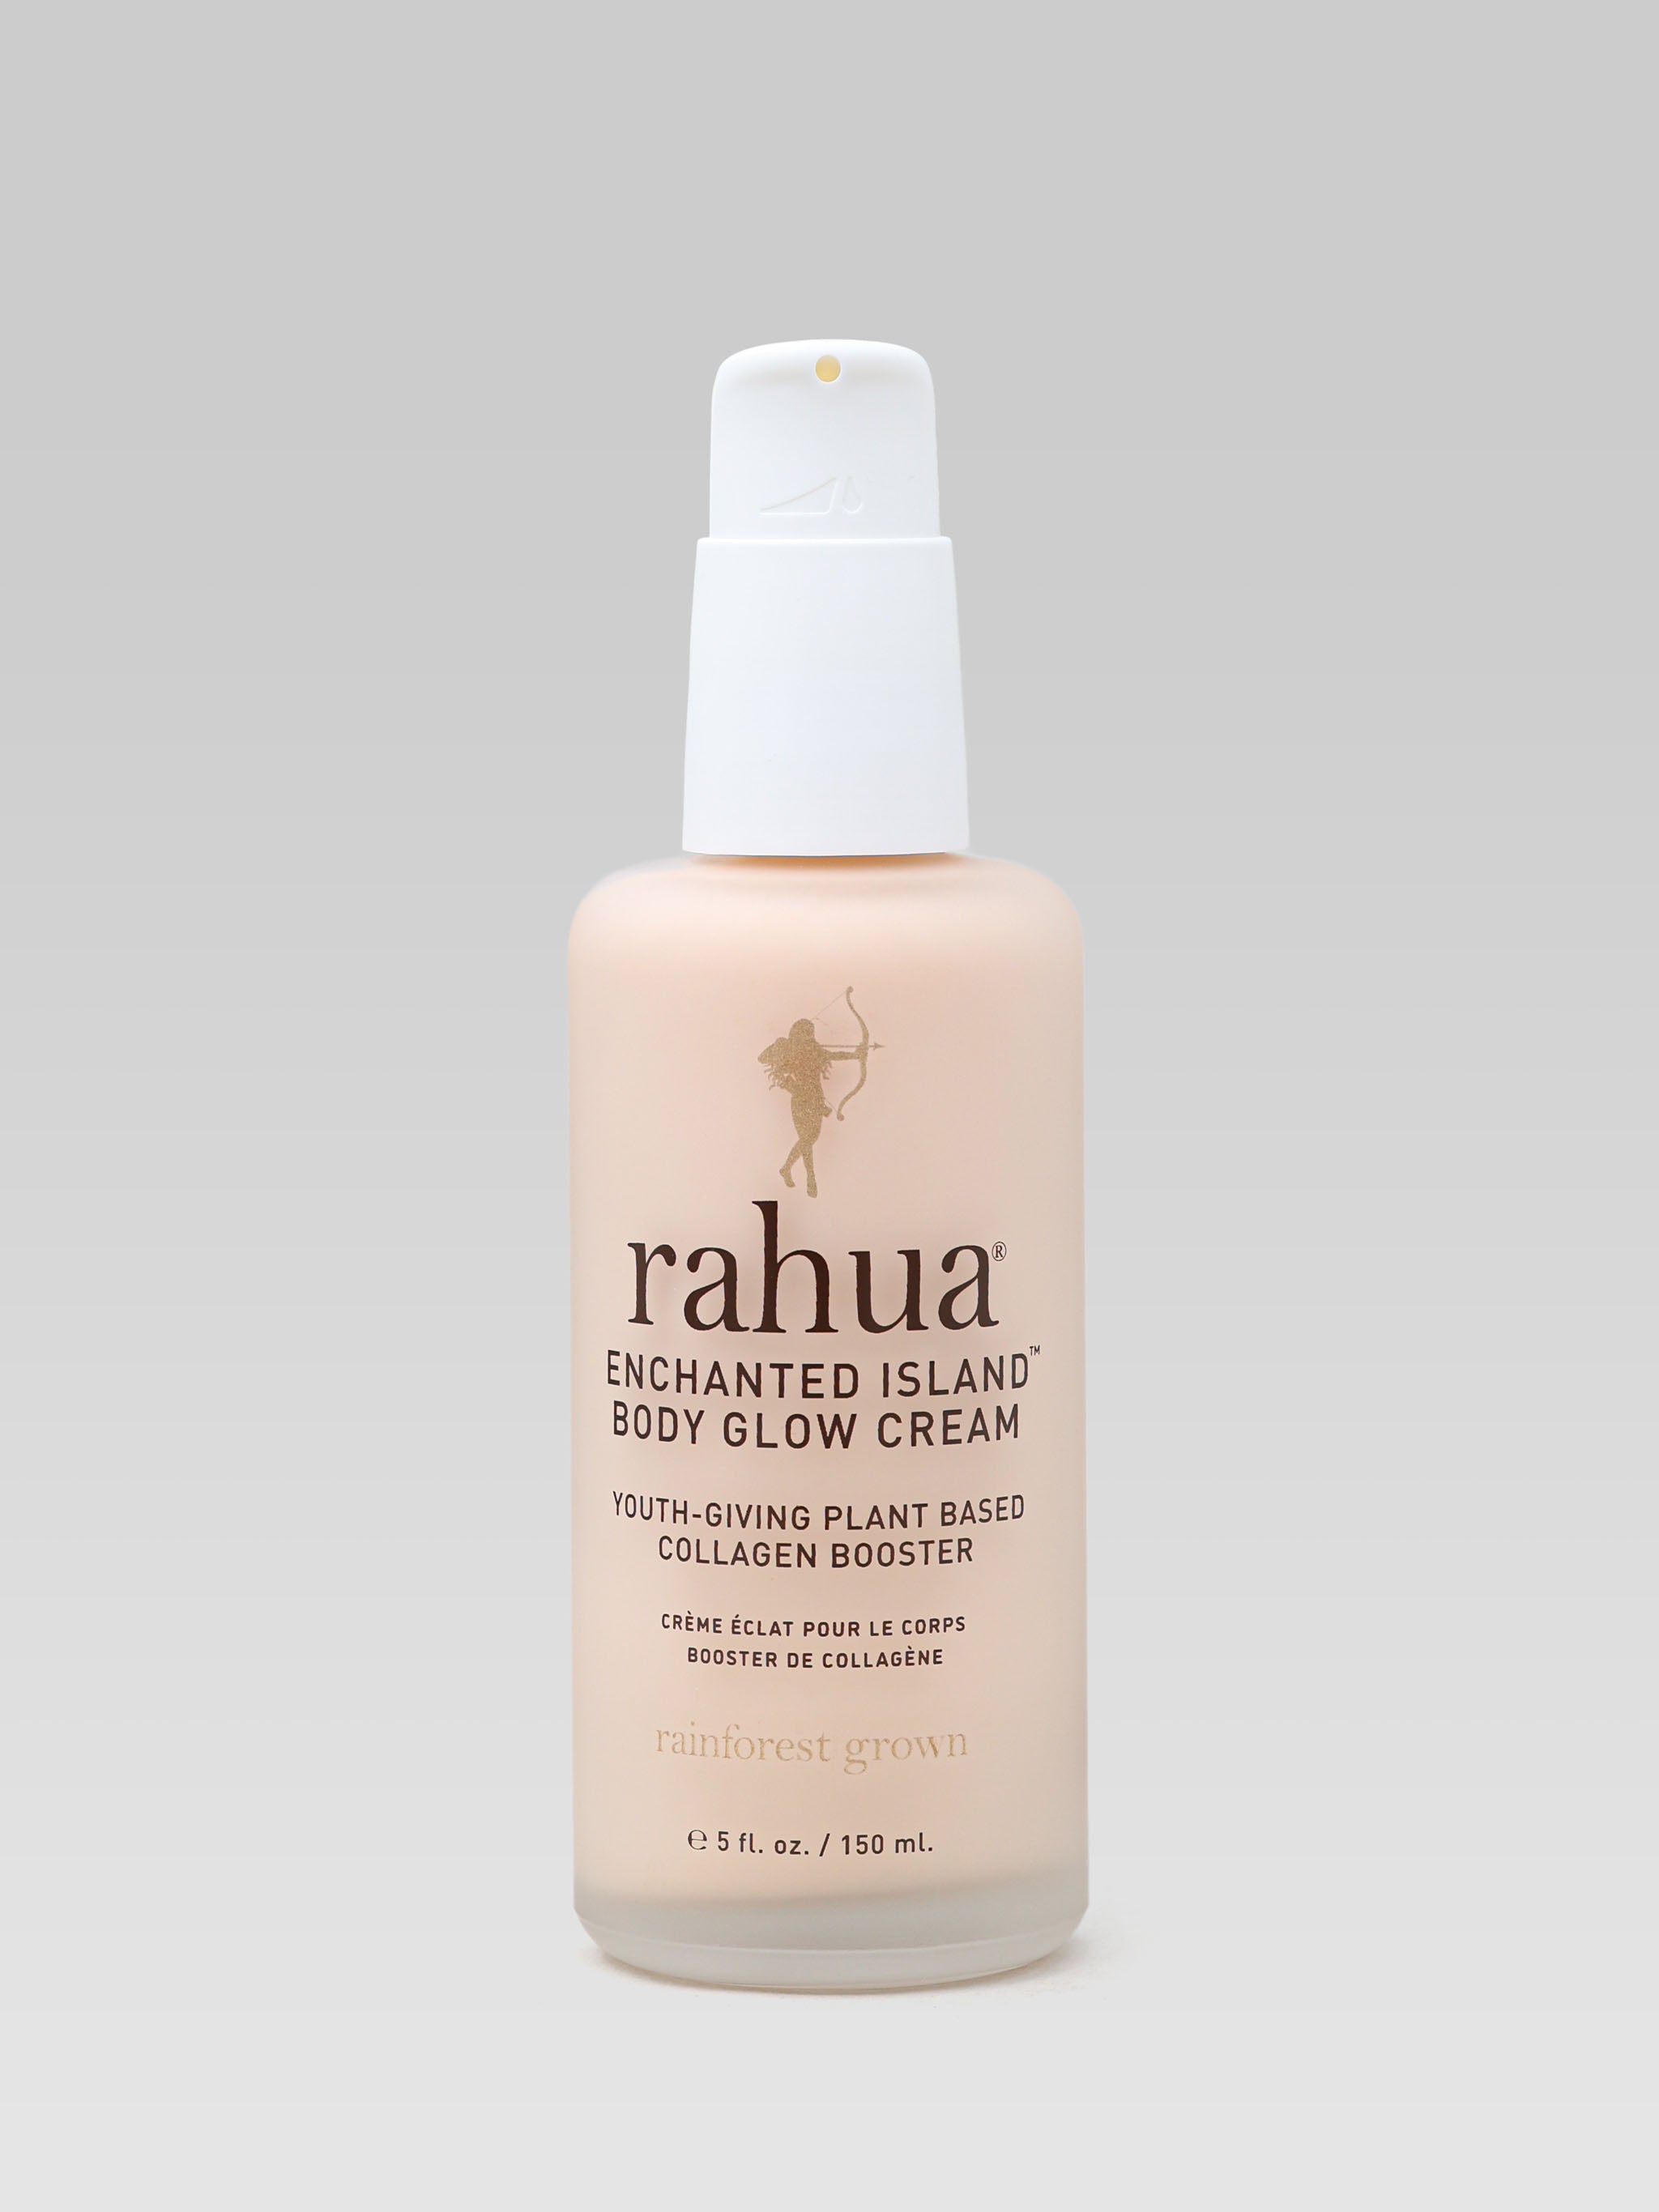 Rahua Enchanted Island Body Glow Cream product shot